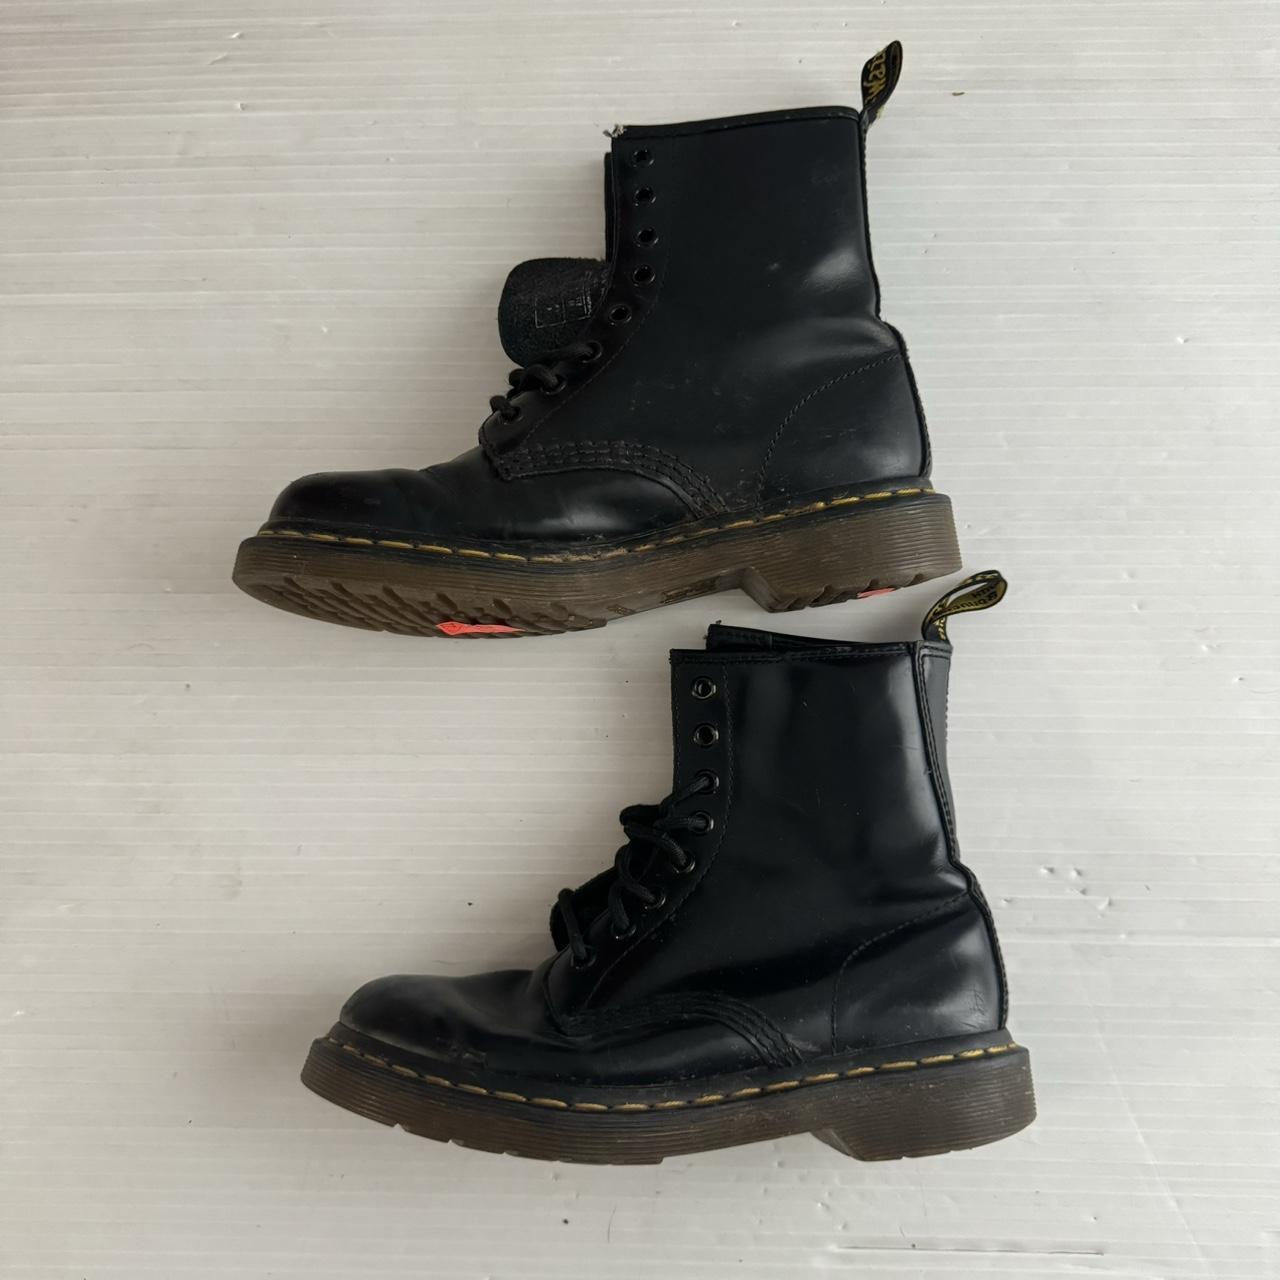 Doc Martens The original Black Boots Combat Leather... - Depop